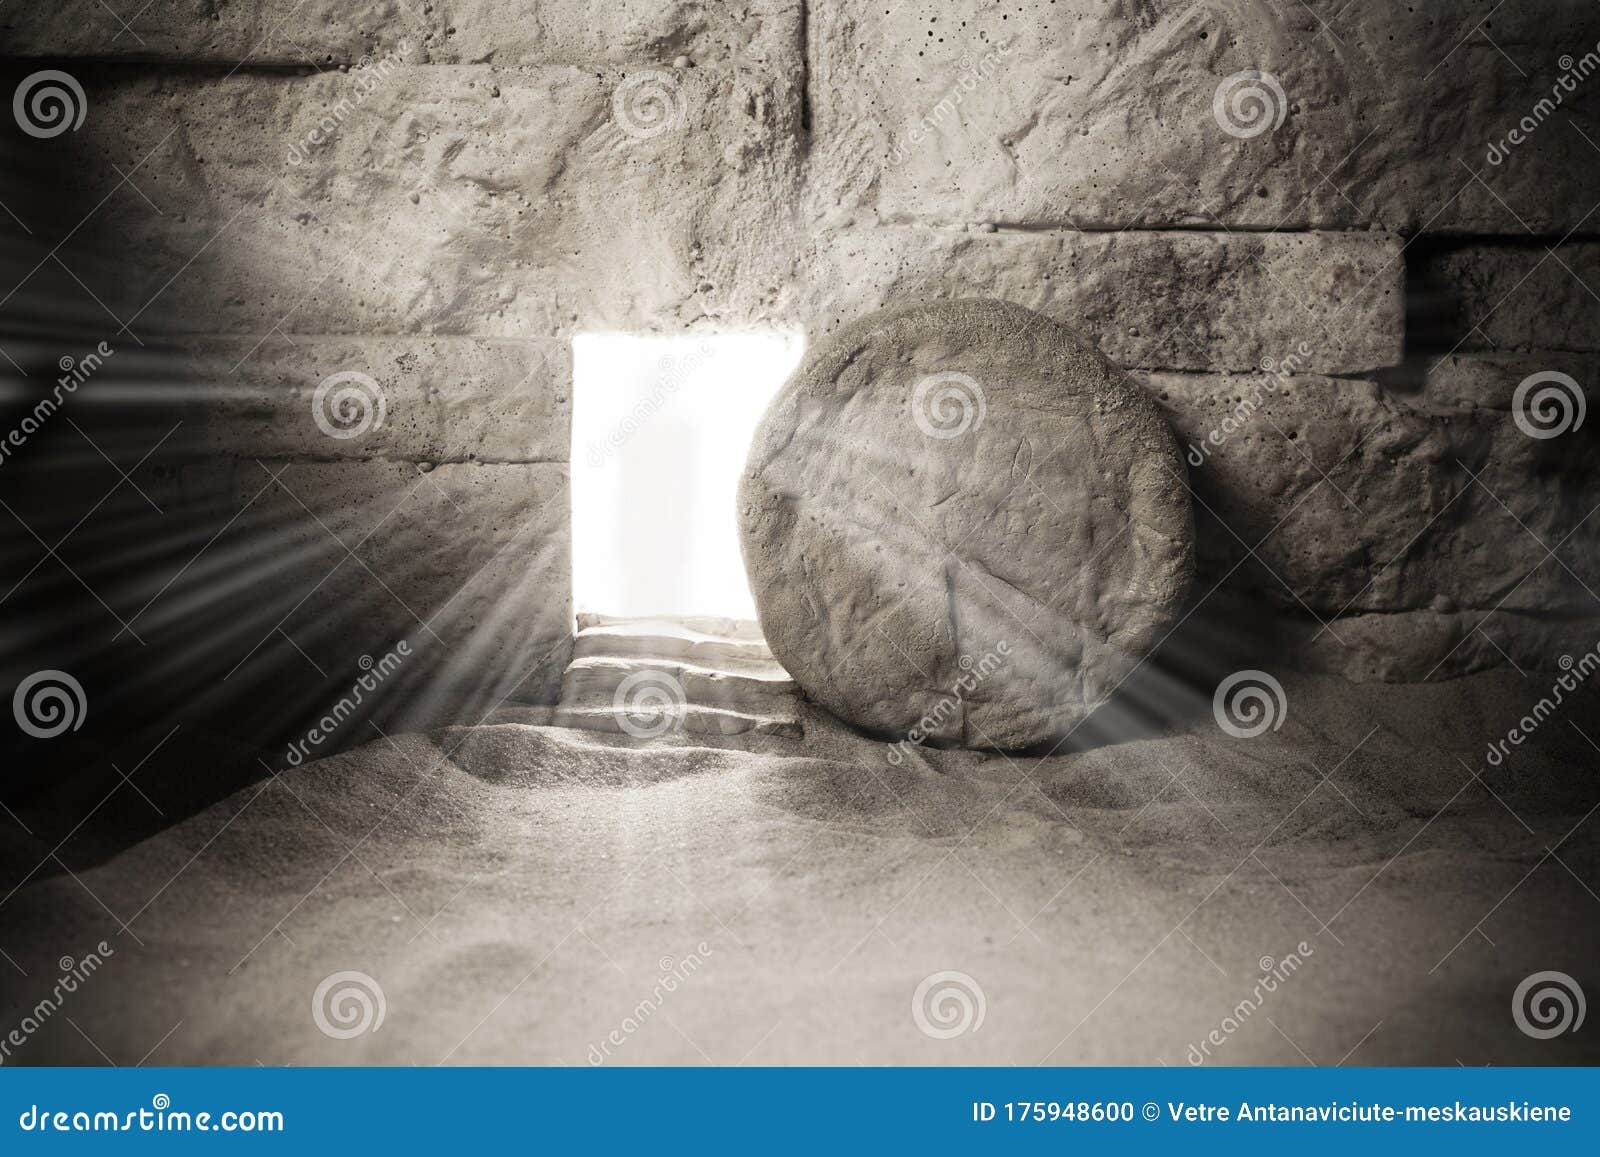 tomb of jesus. jesus christ resurrection. christian easter concept